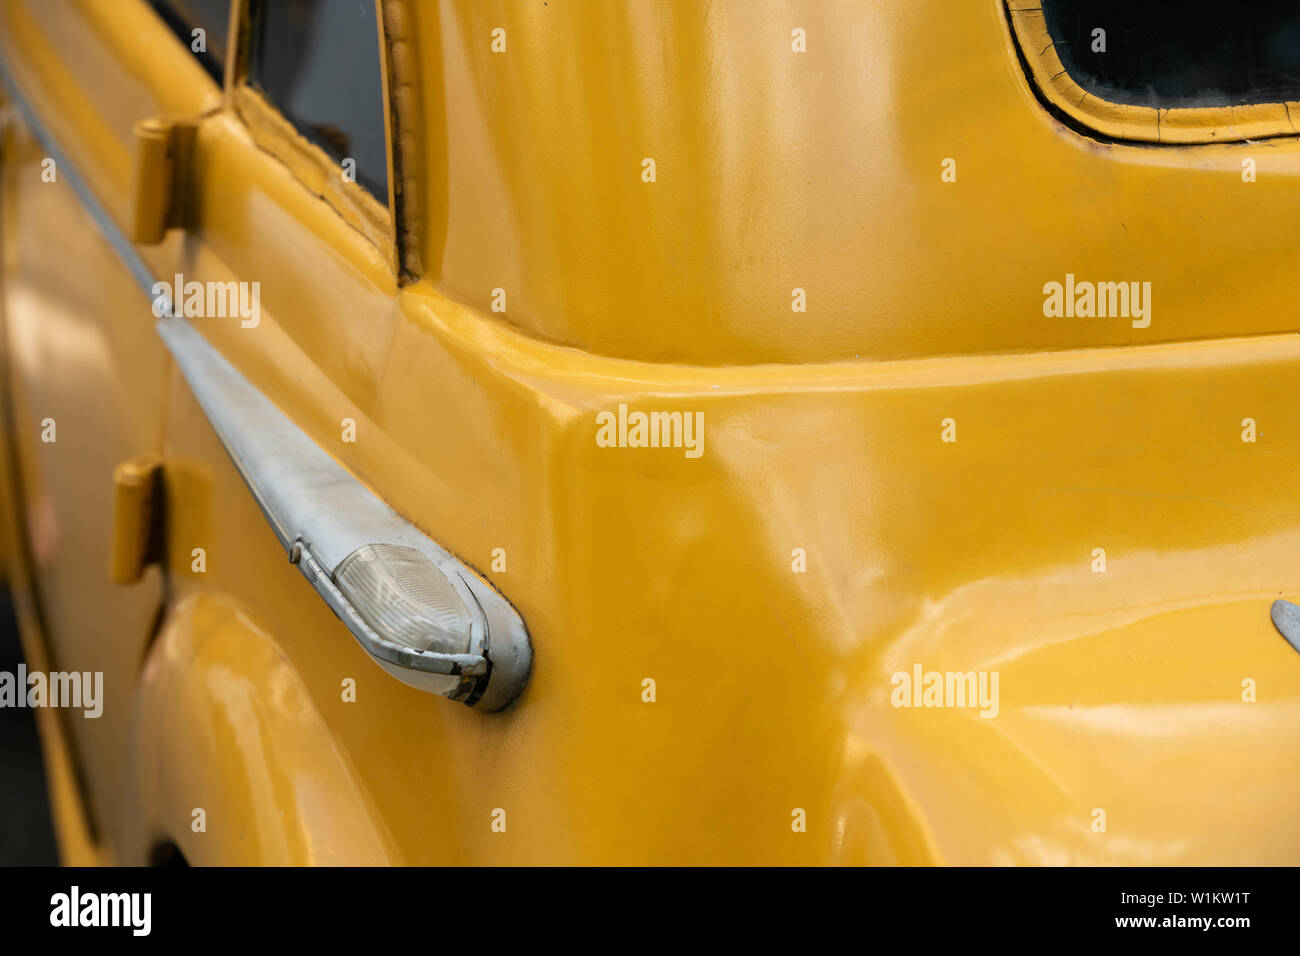 Description: Antique retro yellow car close-up Stock Photo